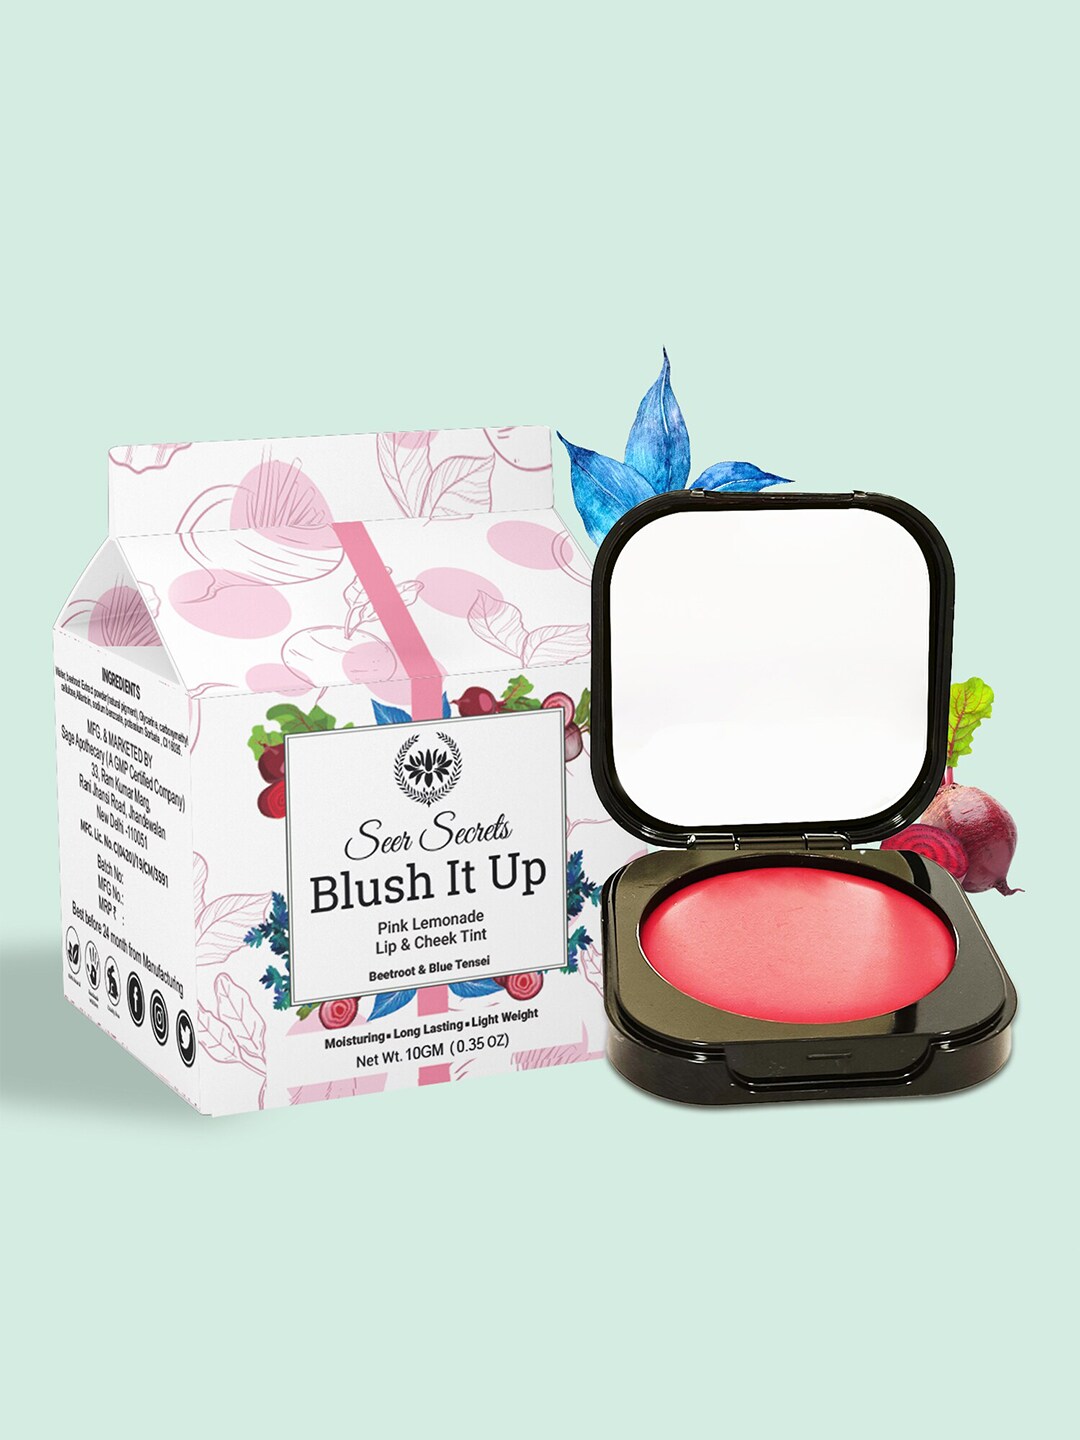 Seer Secrets Blush It Up Lip & Cheek Tint 10 g - Soft Rose Pink Price in India